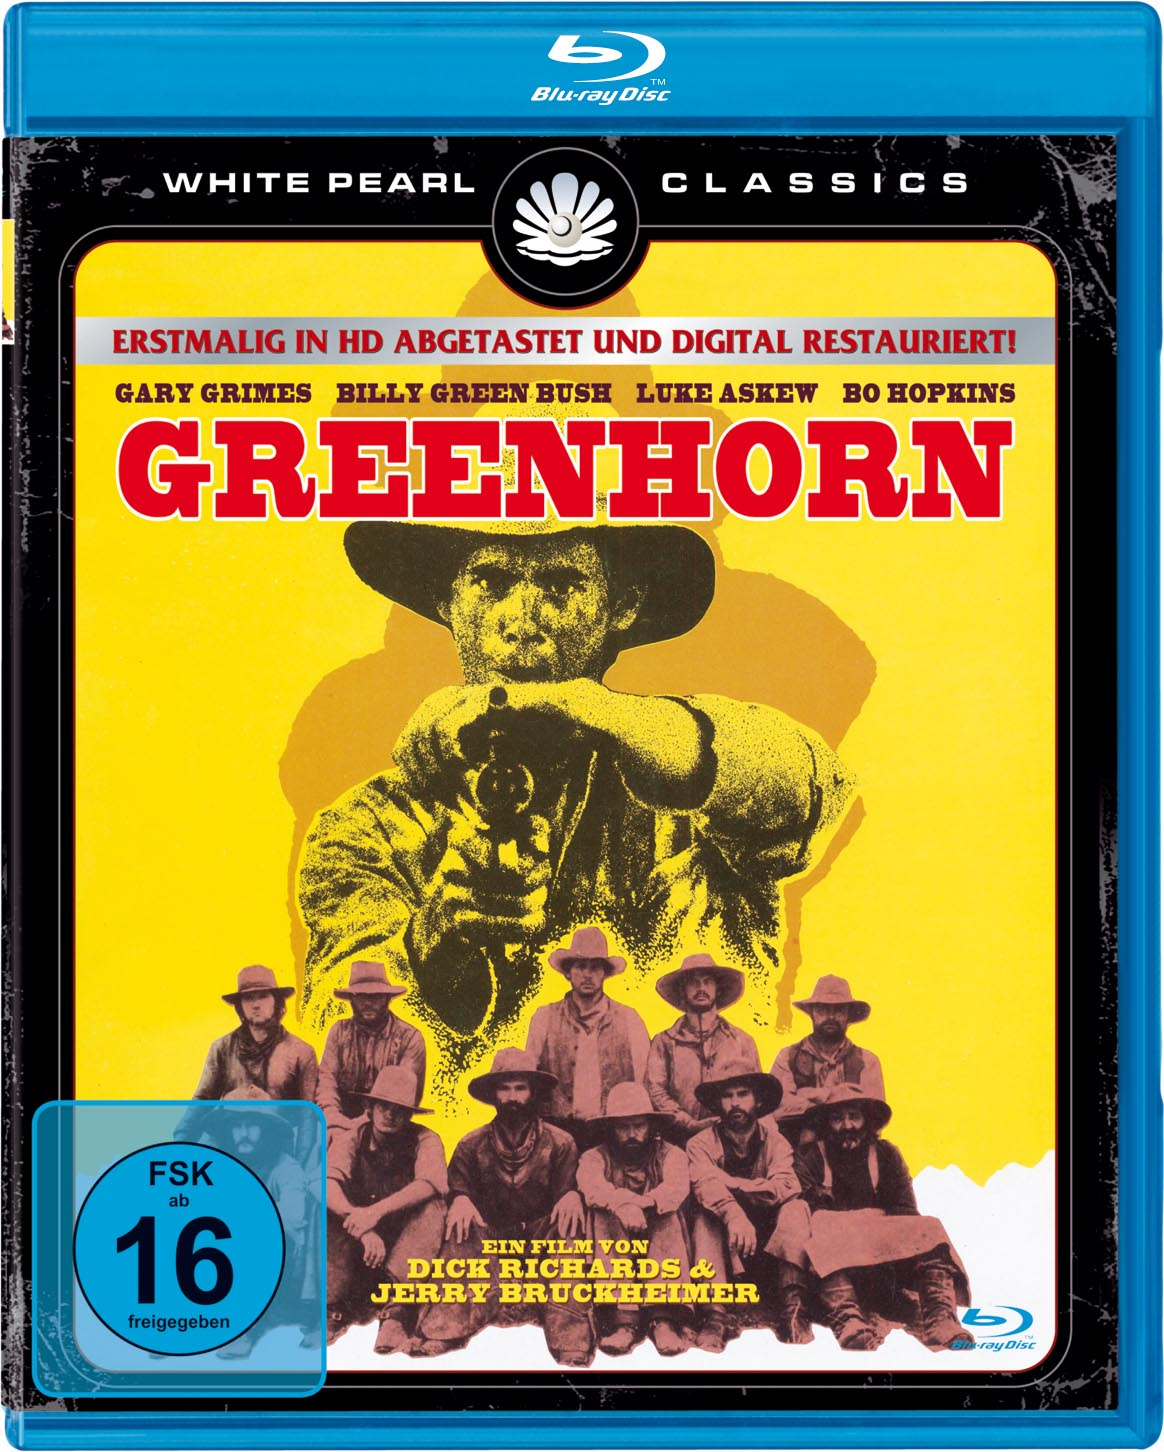 Blu-ray (HD Abgetastet) Neu Greenhorn-Kinofassung